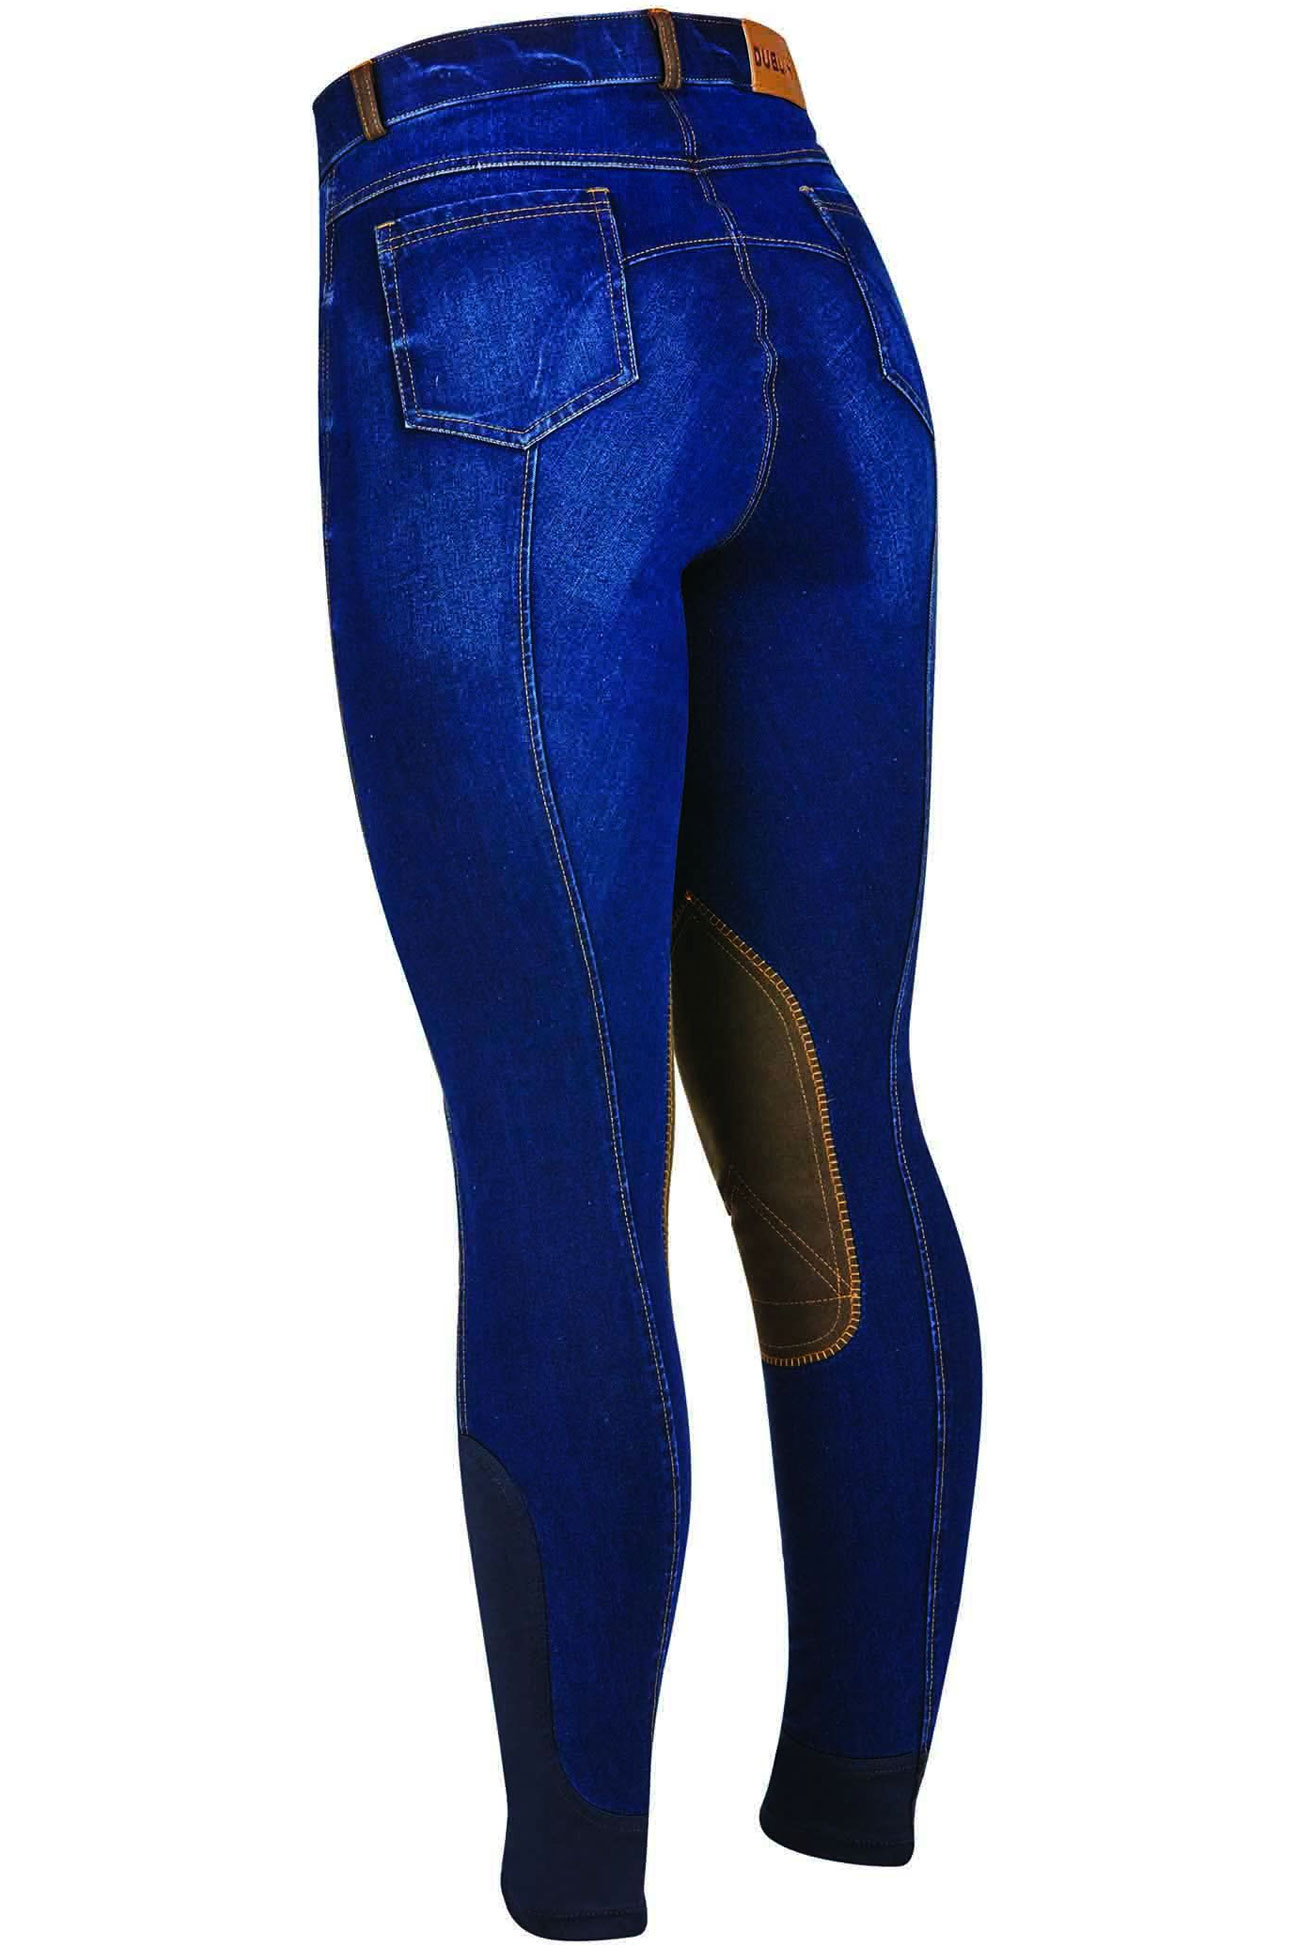 Blue All Sizes Dublin Shona Knee Patch Denim Womens Pants Riding Breeches